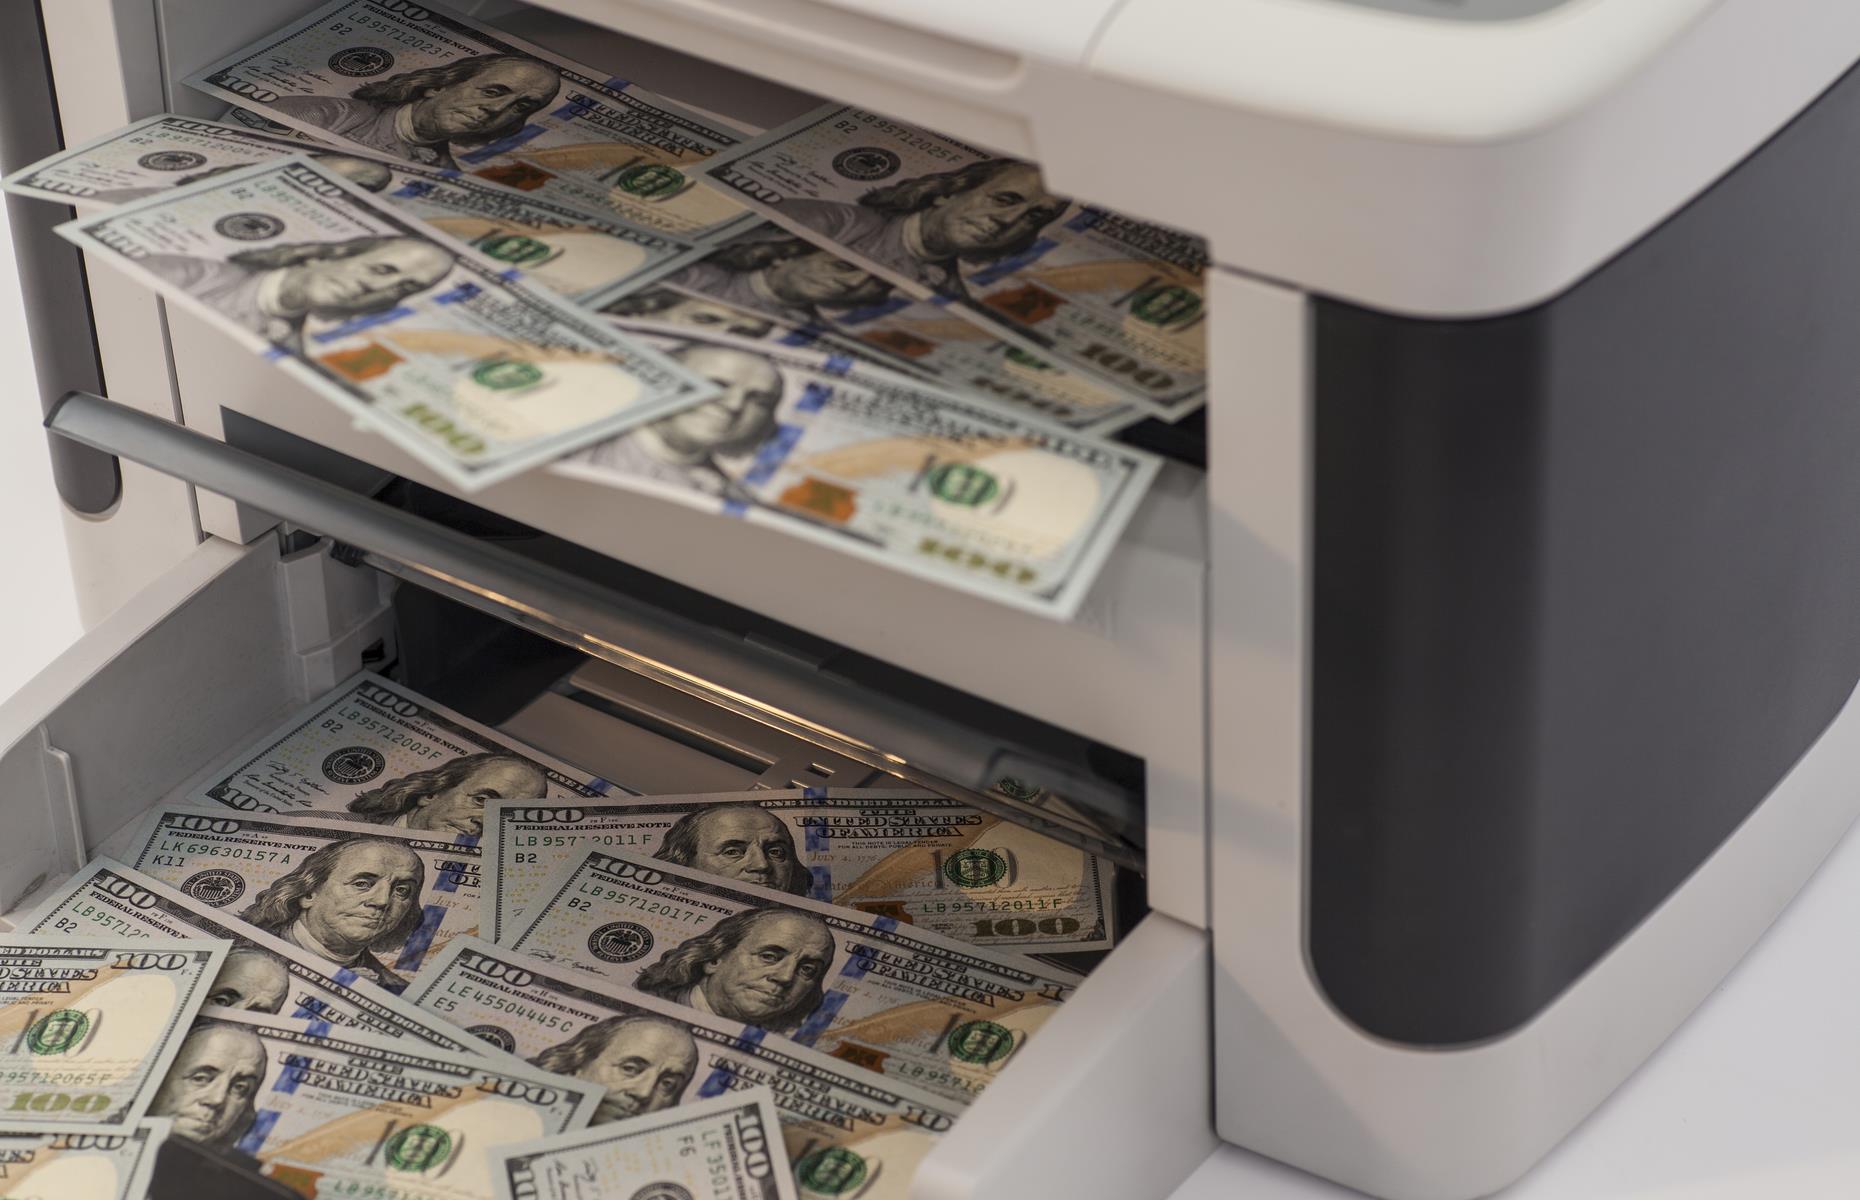 Printing money